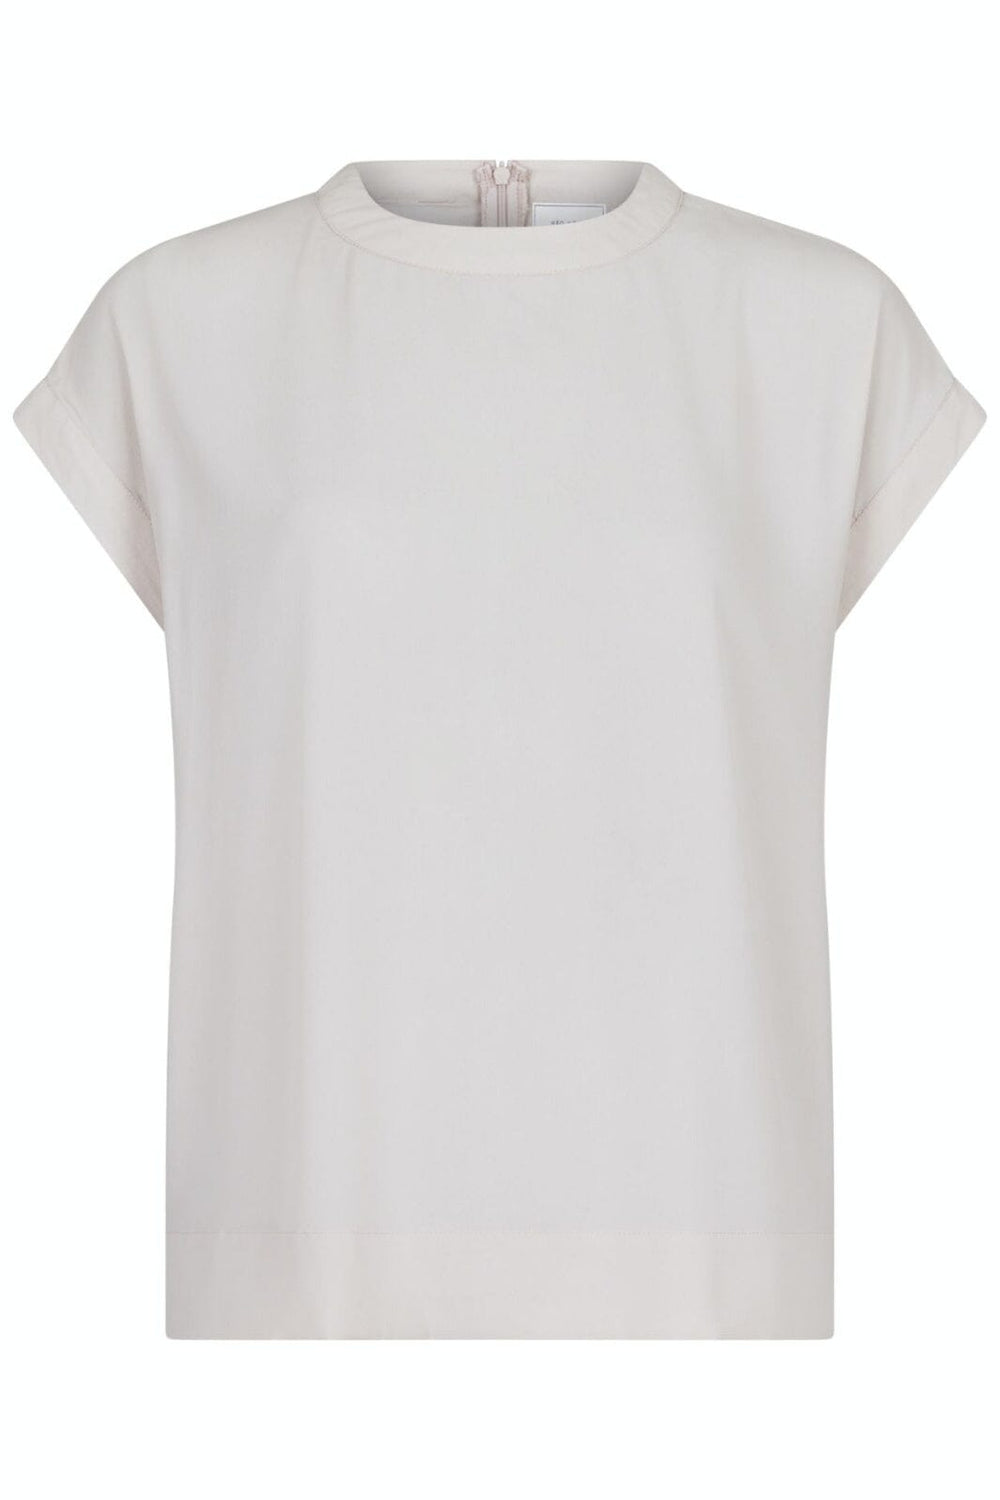 Neo Noir - Diandra Top - Ivory T-shirts 